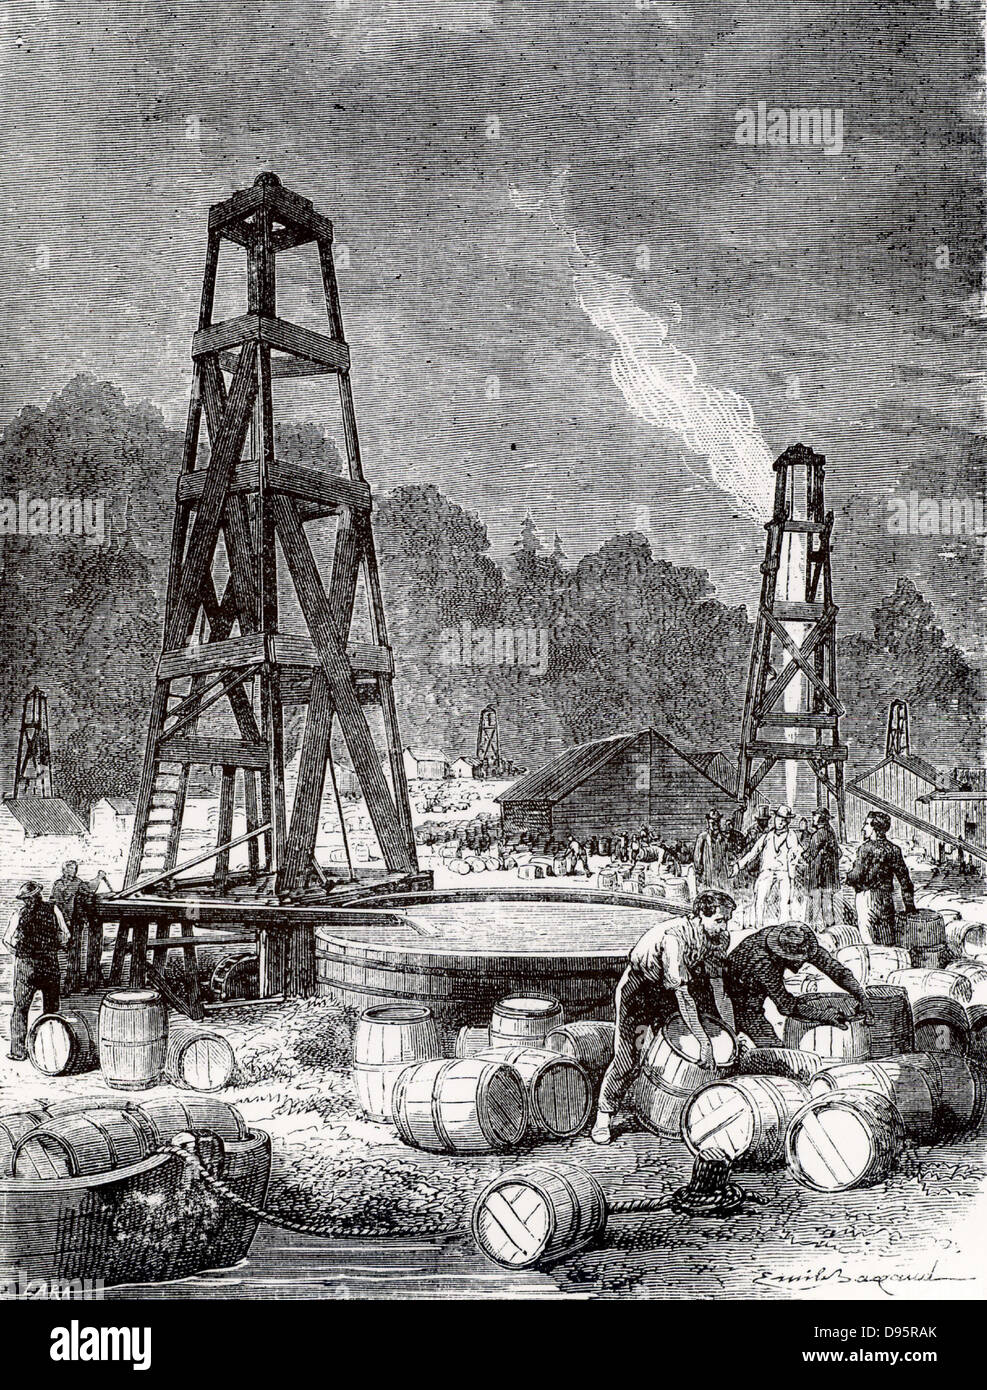 Ölquellen am Creek, 150 Meilen bis die Allegheny River aus Pittsburgh, Pennsylvania, USA. Gravur von 'Les merveilles de la Science" von Louis Figuier (Paris, c 1870). Stockfoto